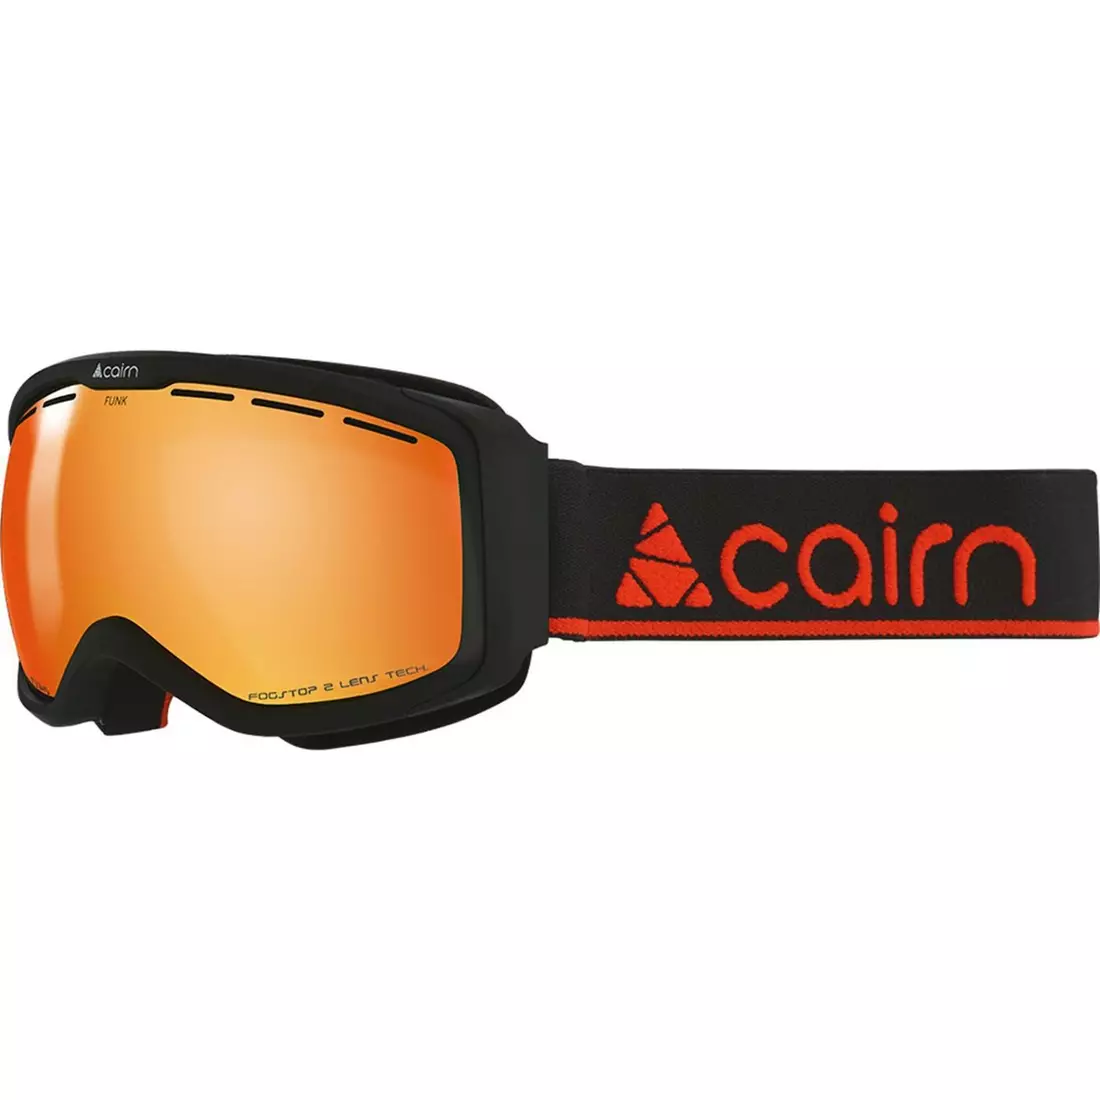 CAIRN juniorské lyžařské/snowboardové brýle FUNK OTG SPX3000 IUM Mat Black Orange 